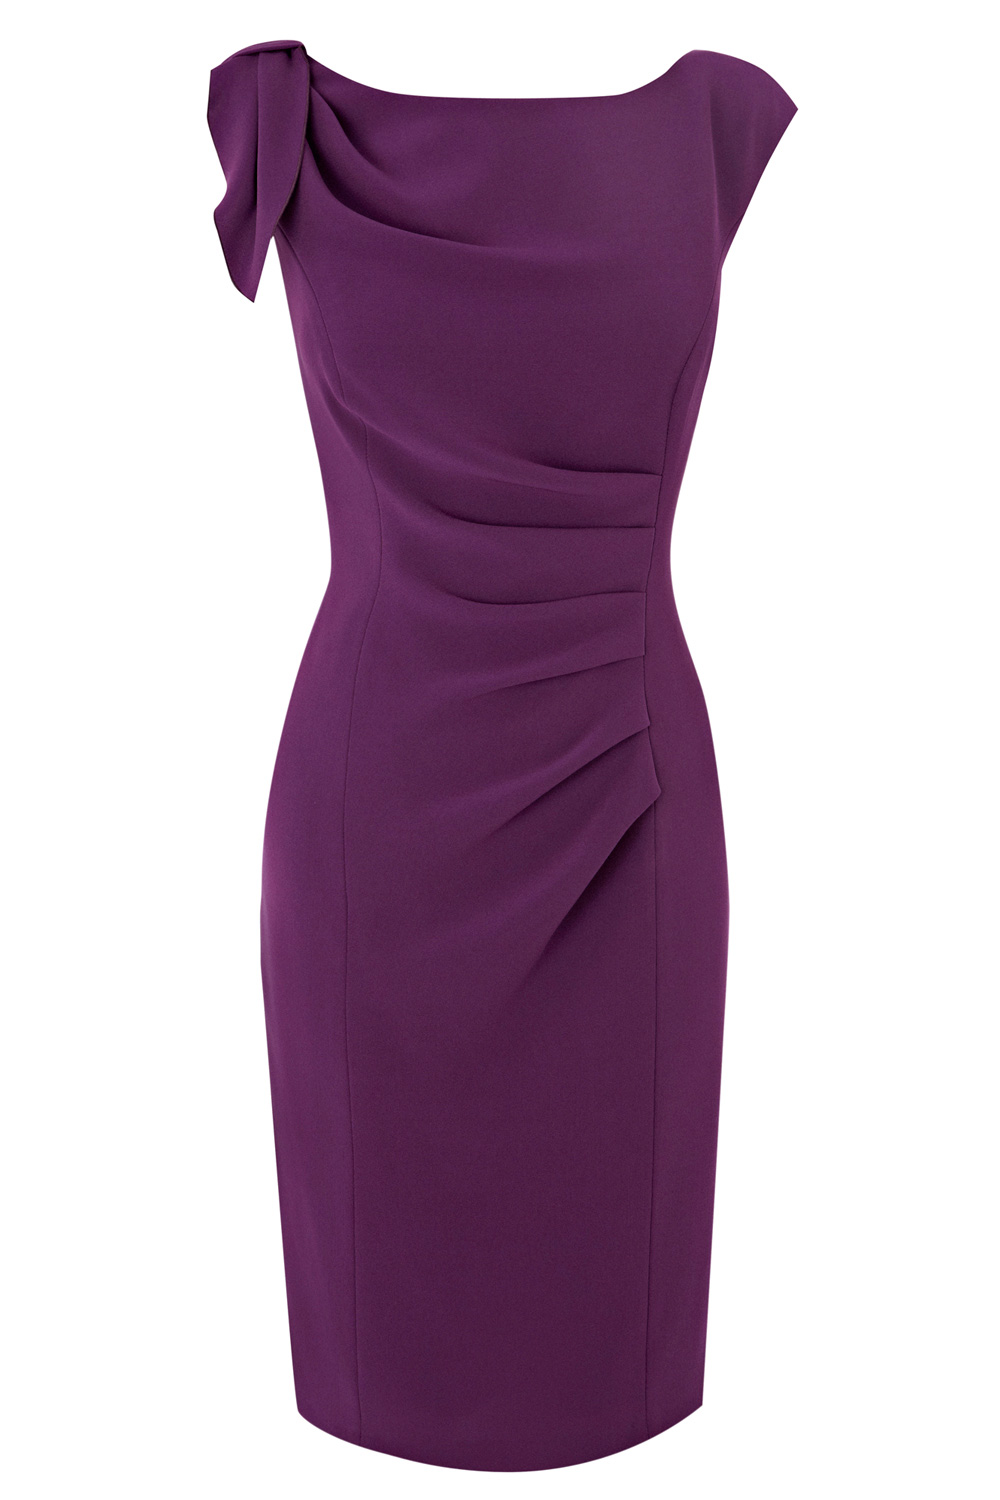 Lyst - Coast Santana Crepe Dress in Purple